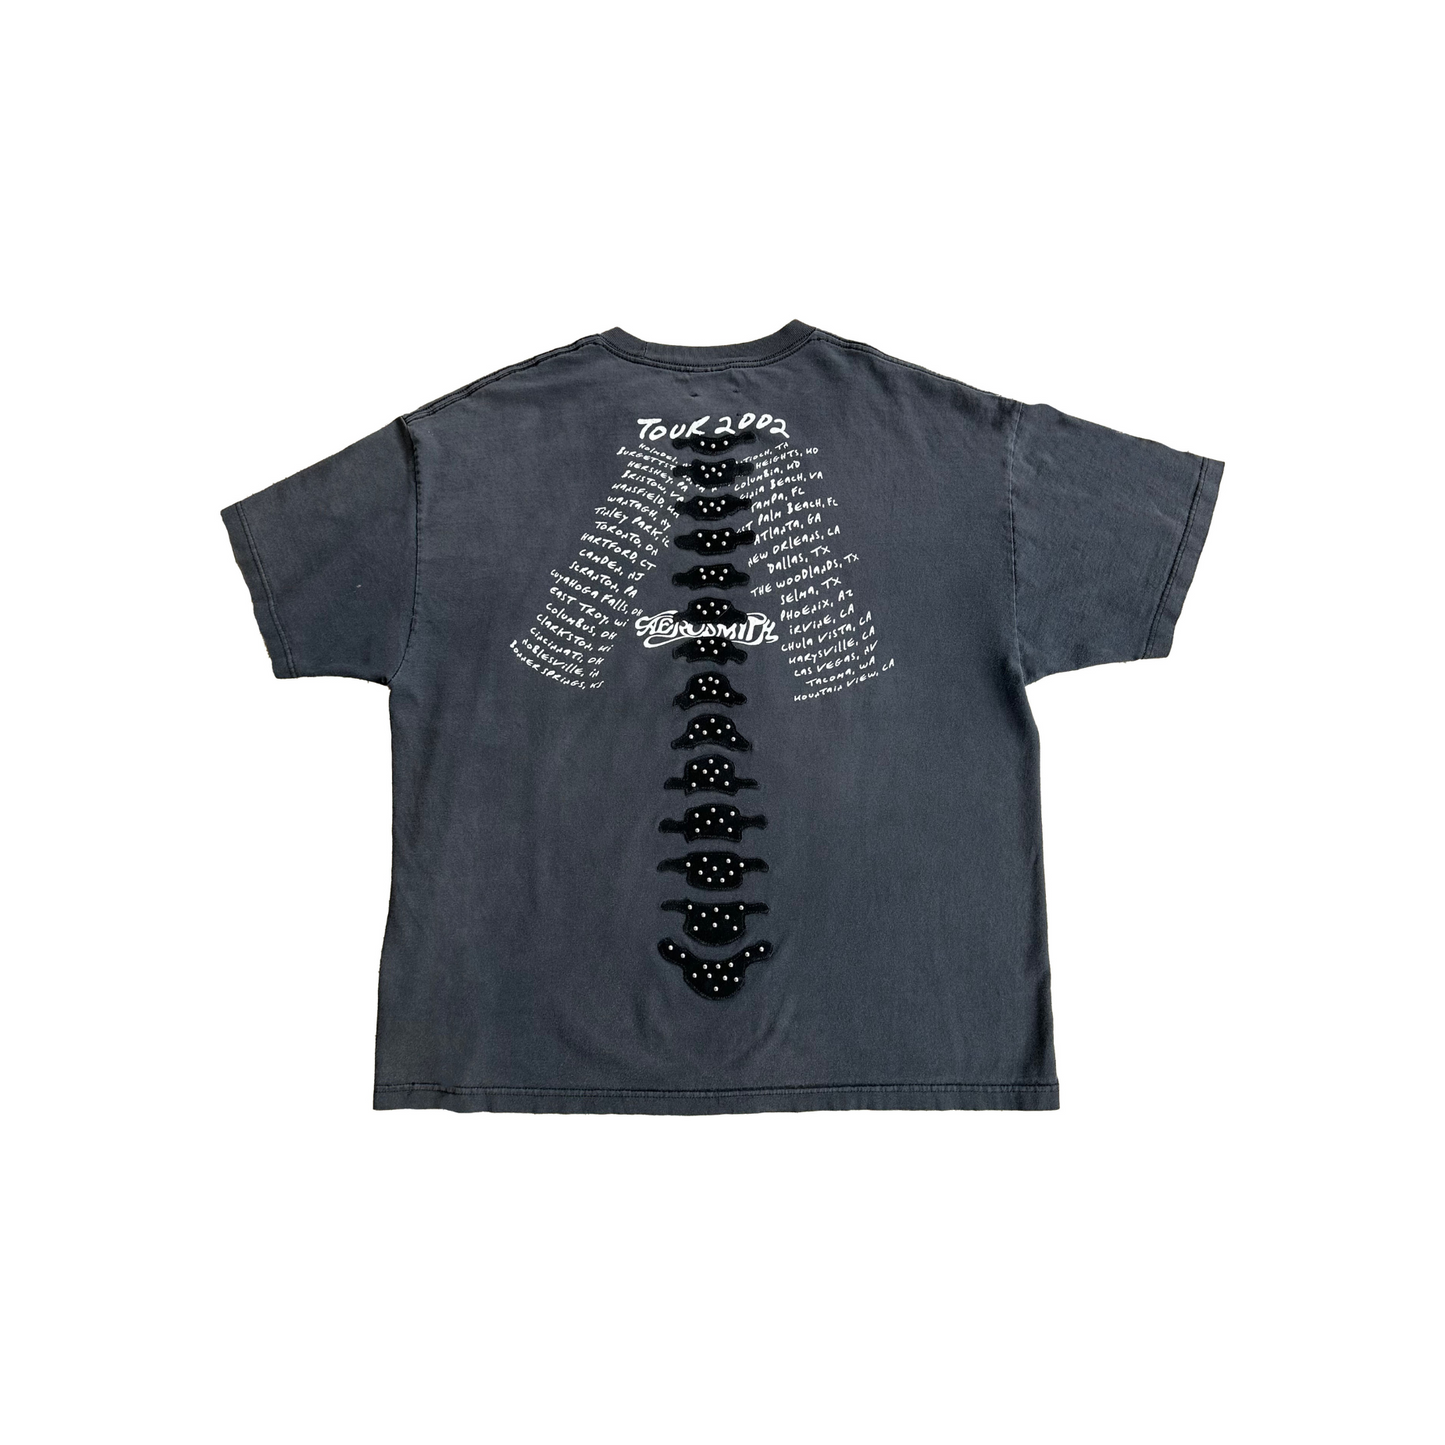 2002 Aerosmith Tour T-shirt with Studded Leather Appliqué